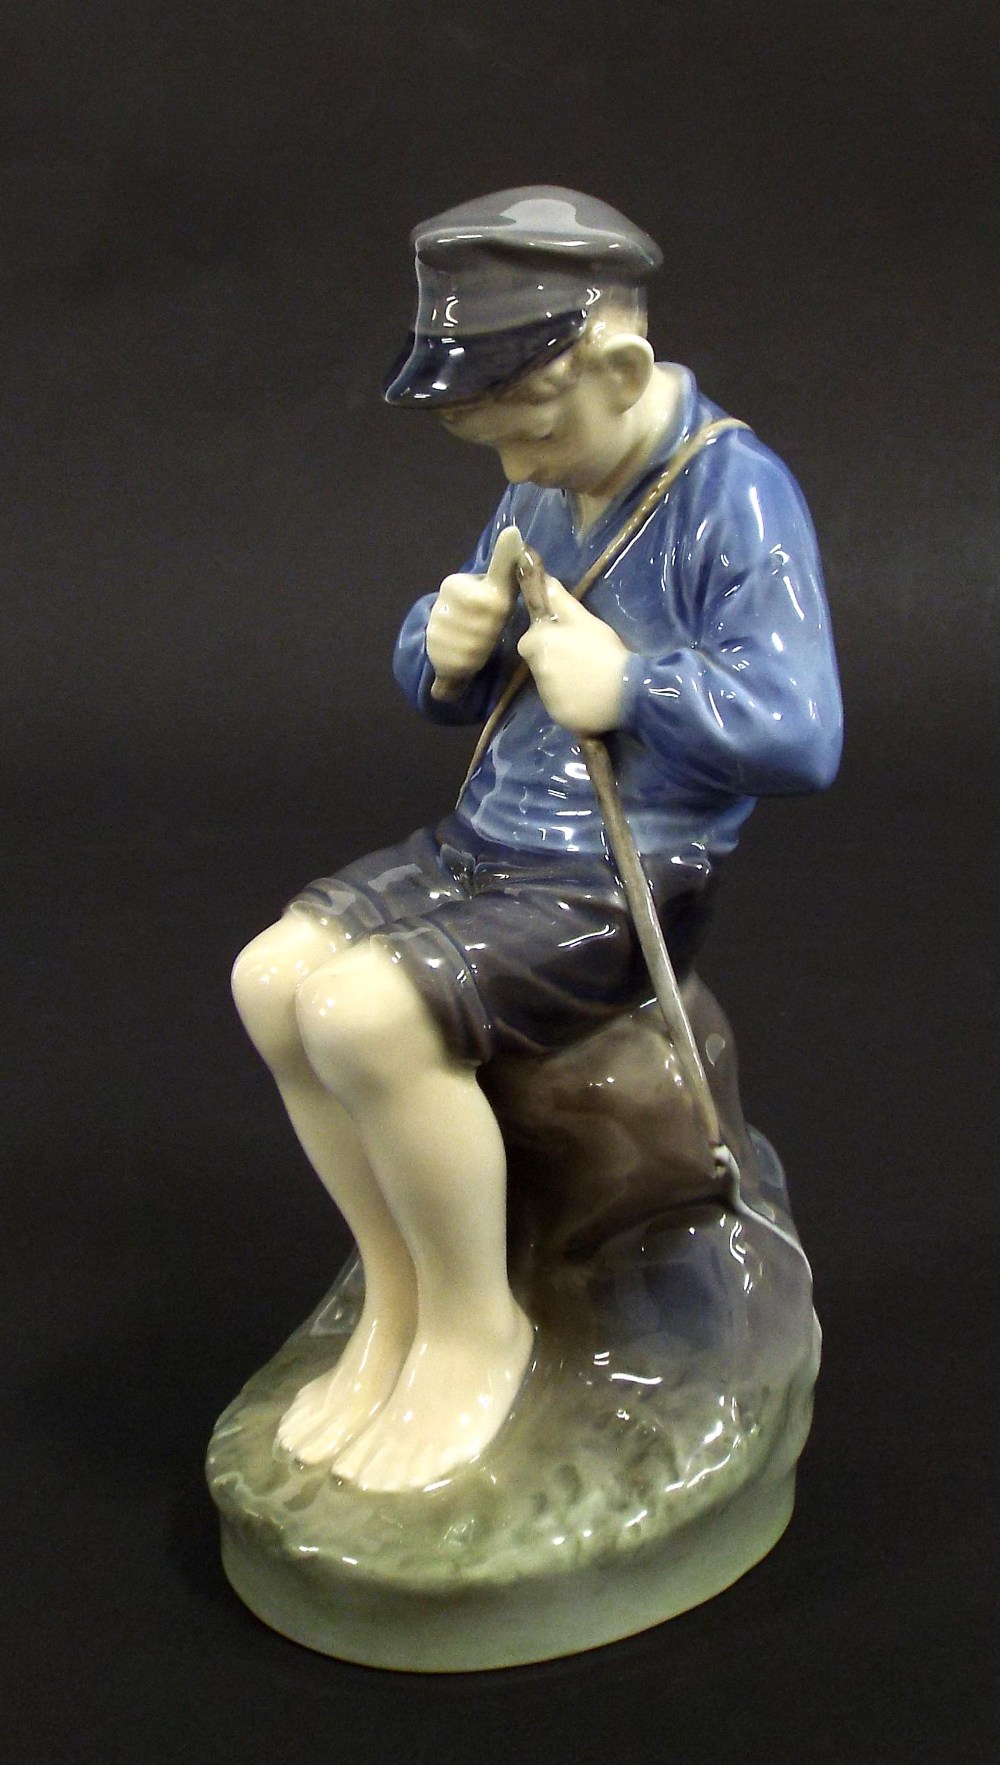 Royal Copenhagen porcelain figure of a fisher boy, no. 905, 7.5" high